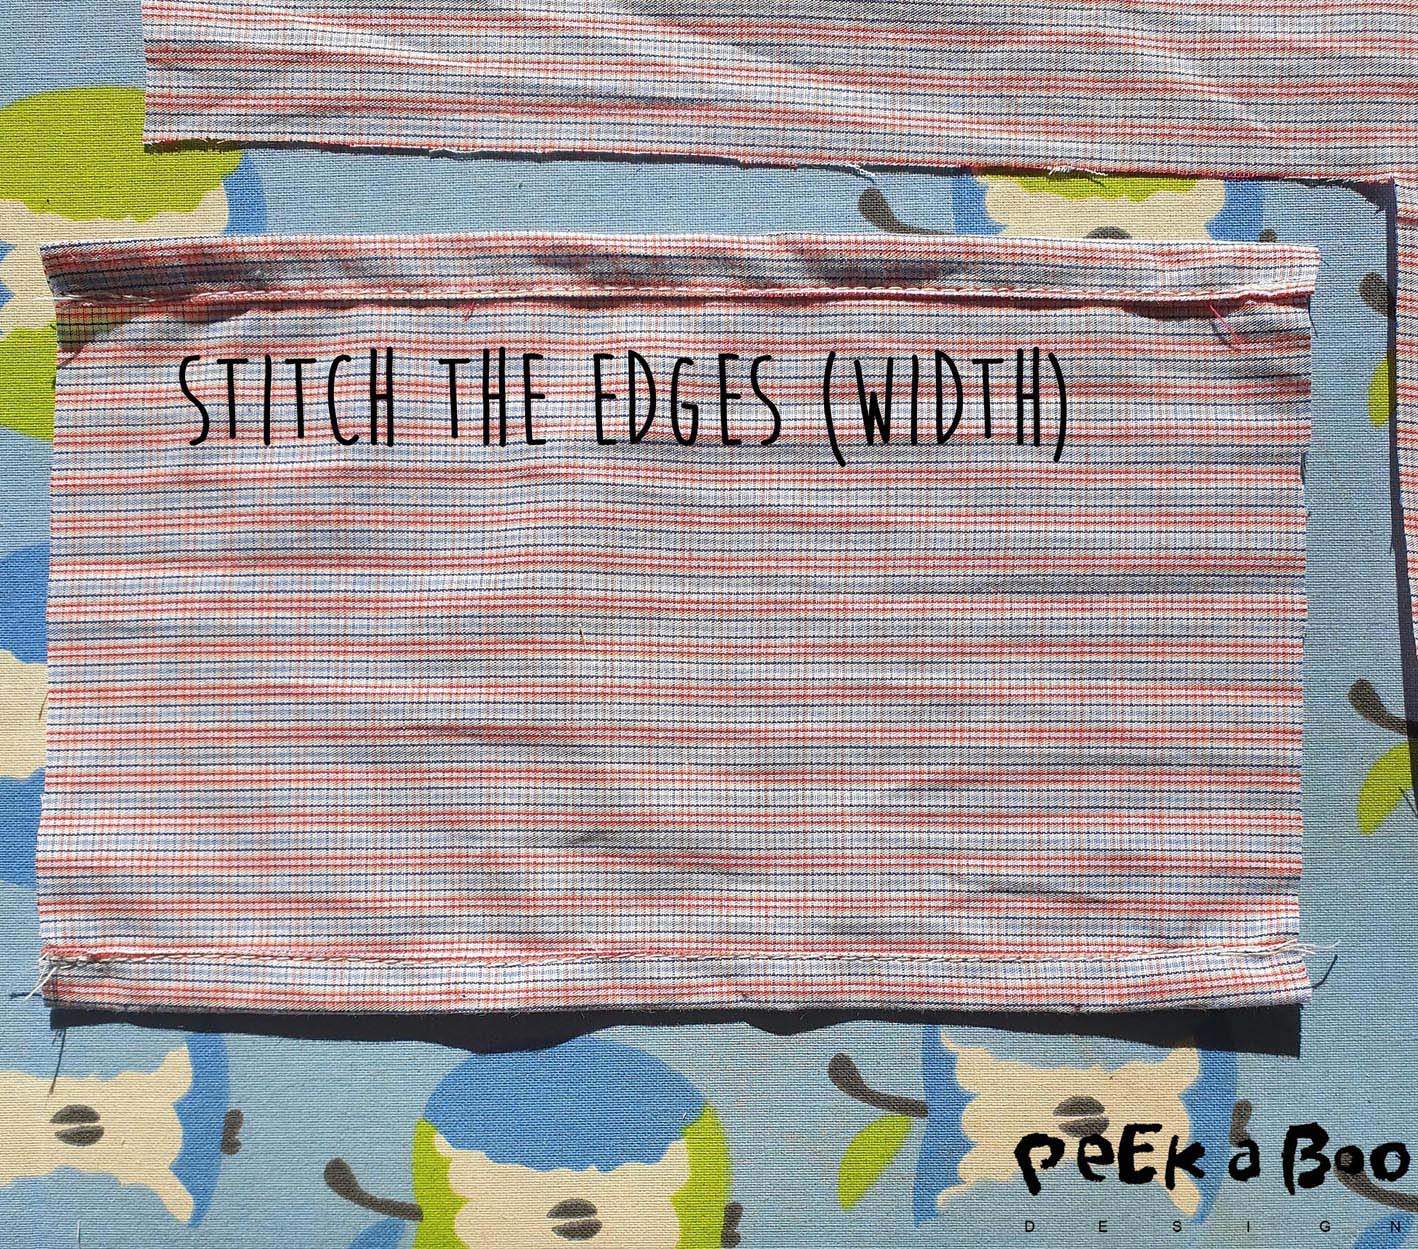 Stitch the long edges.